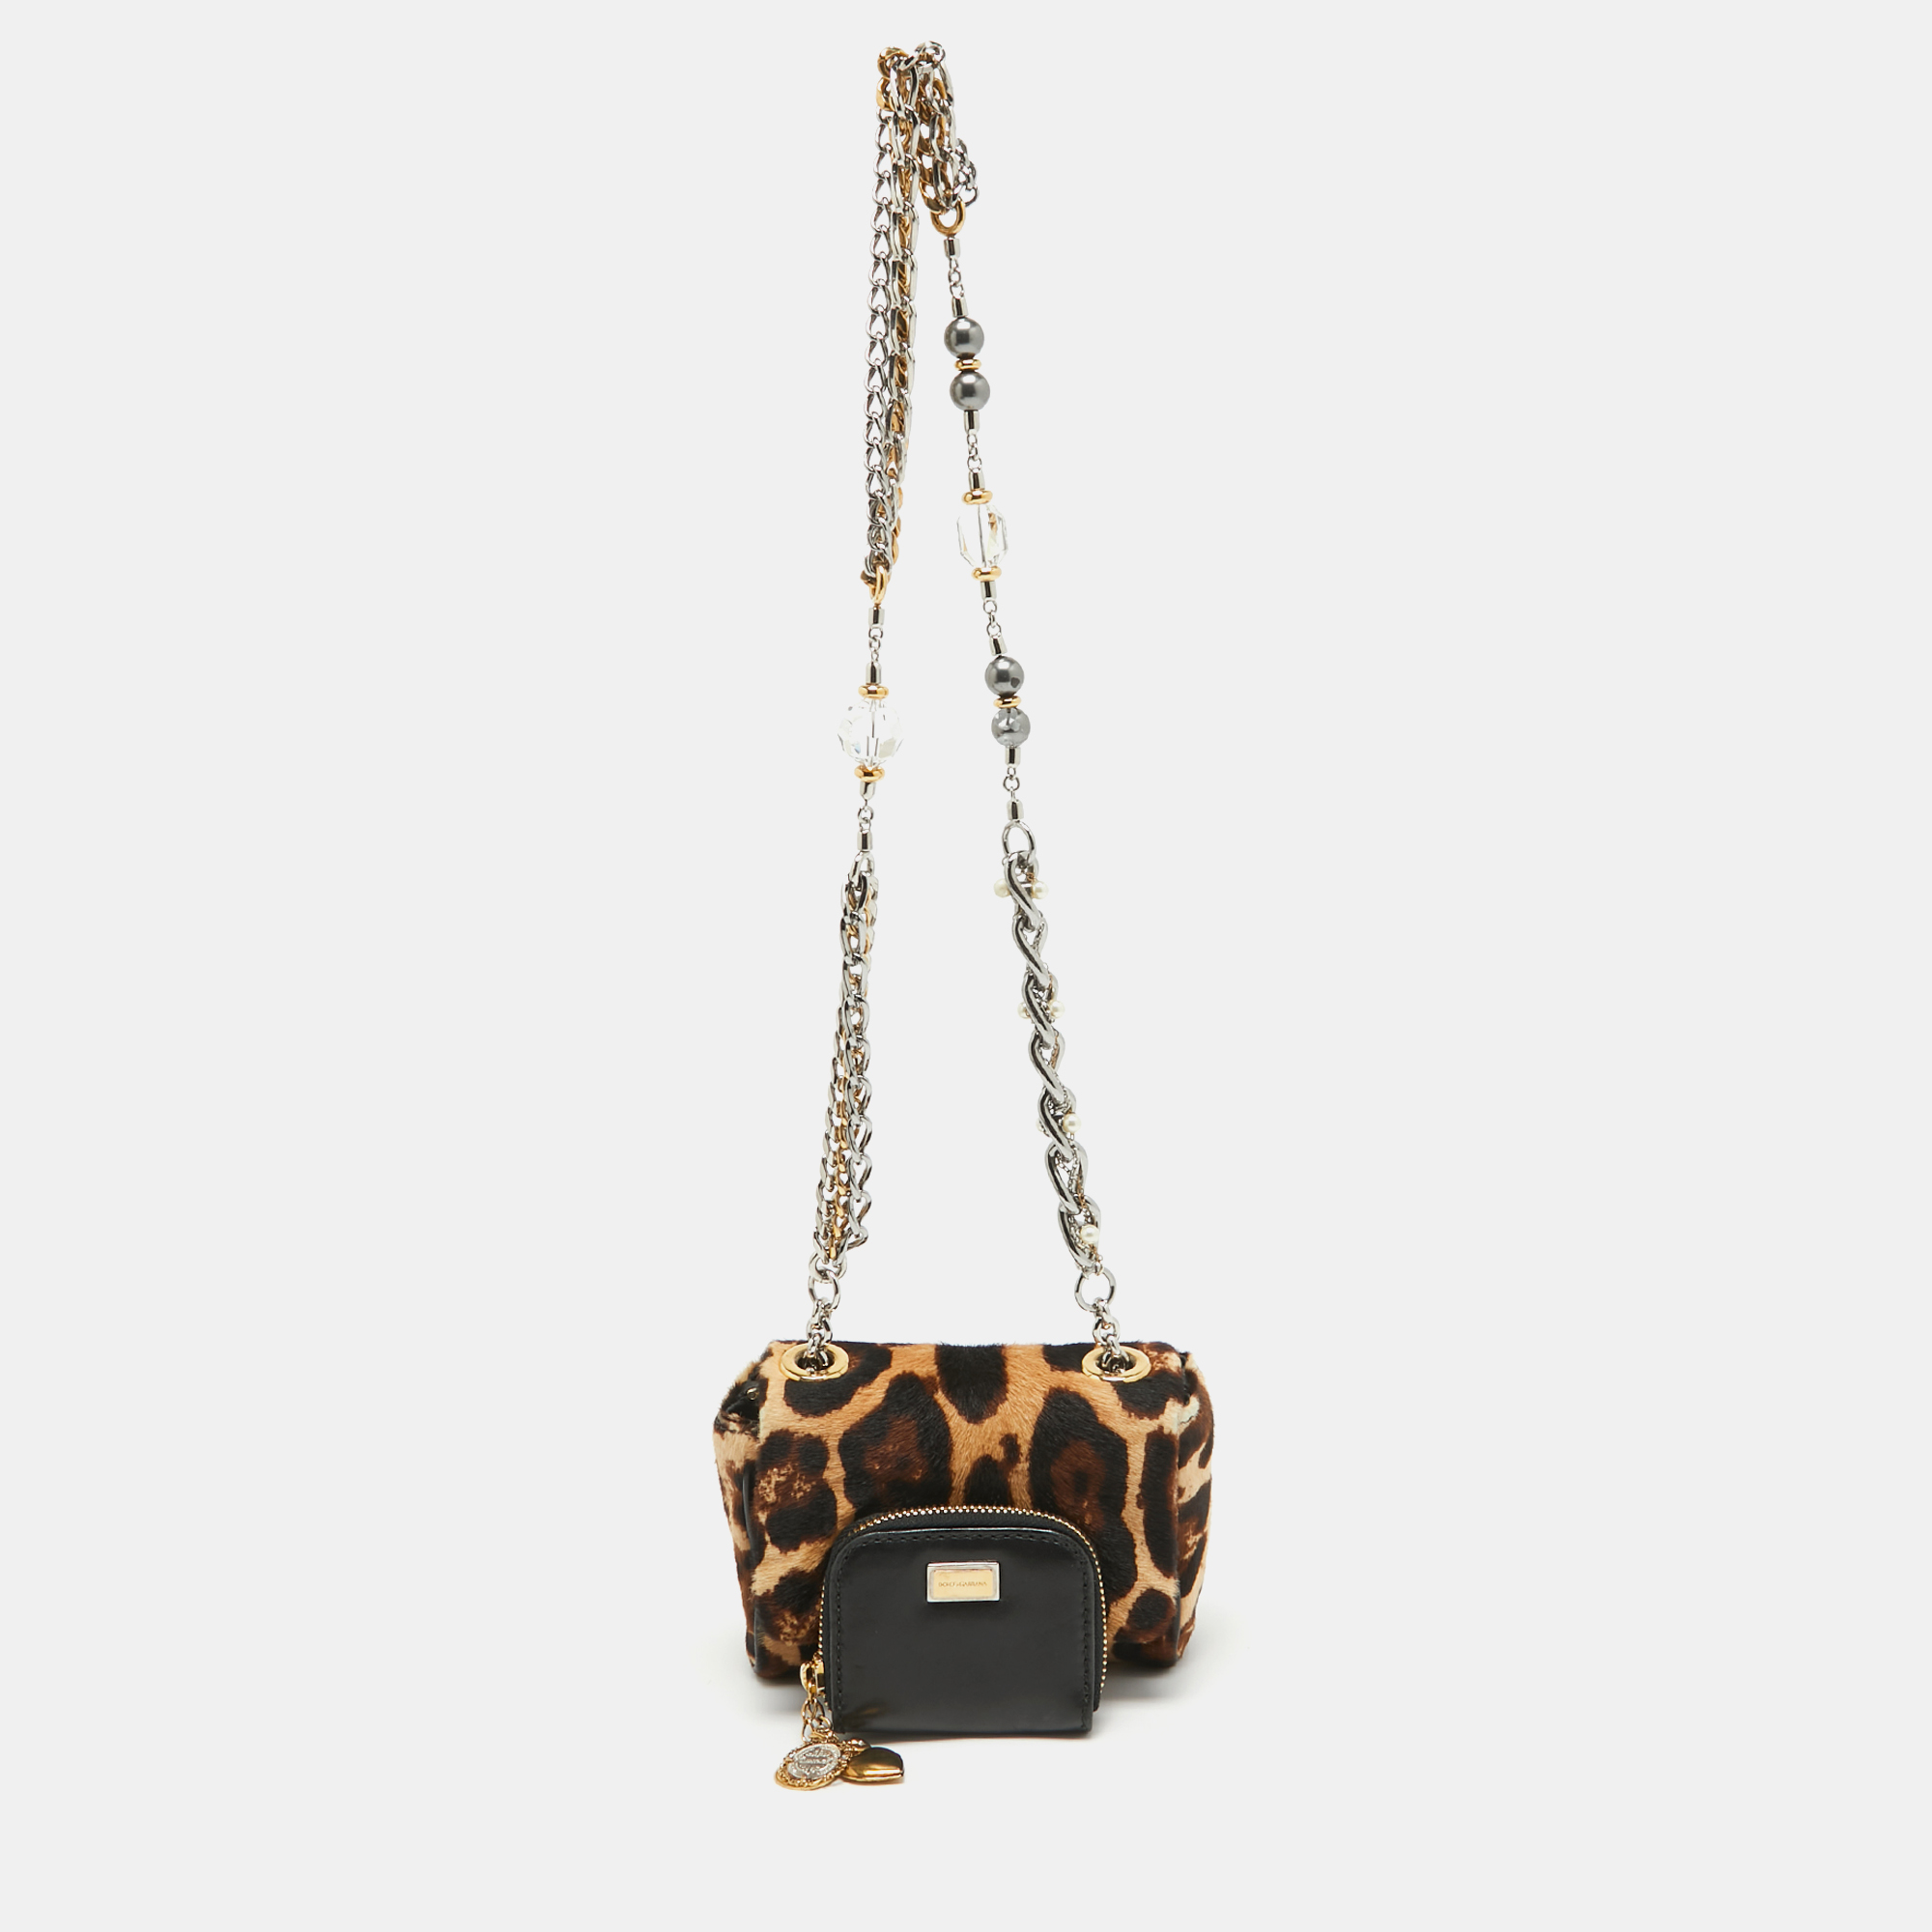 Dolce & gabbana black/beige leopard print calfhair and leather mini miss charles bag